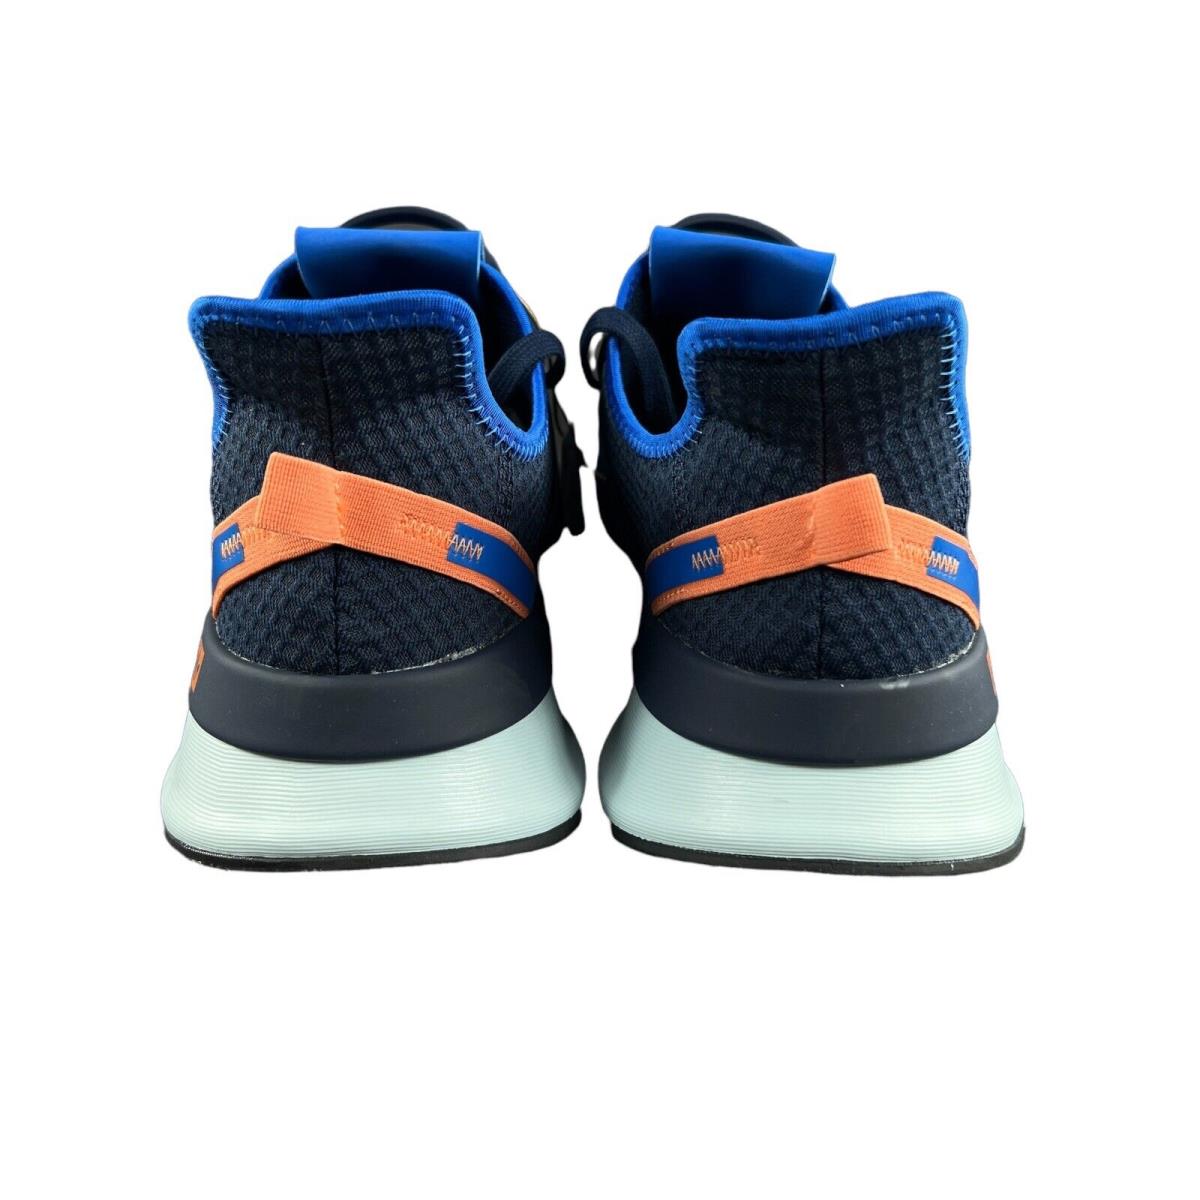 Adidas Men`s U_path Run Navy Blue Black Shoes FV9254 Sizes 9 - 13